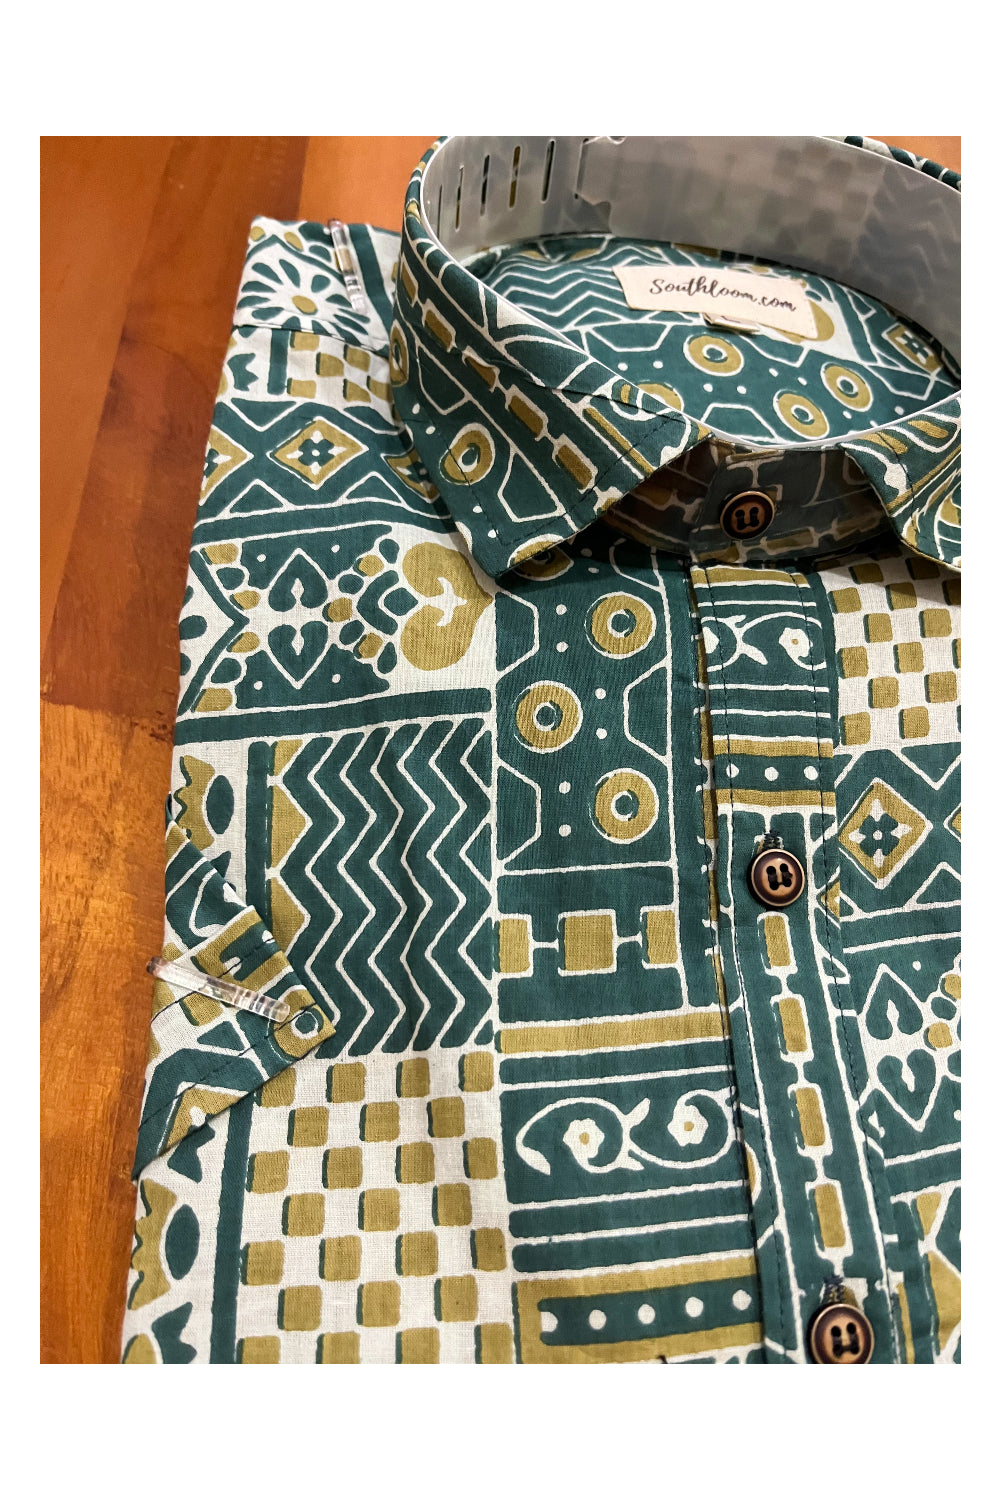 Southloom Jaipur Cotton Green Hand Block Printed Shirt (Half Sleeves)